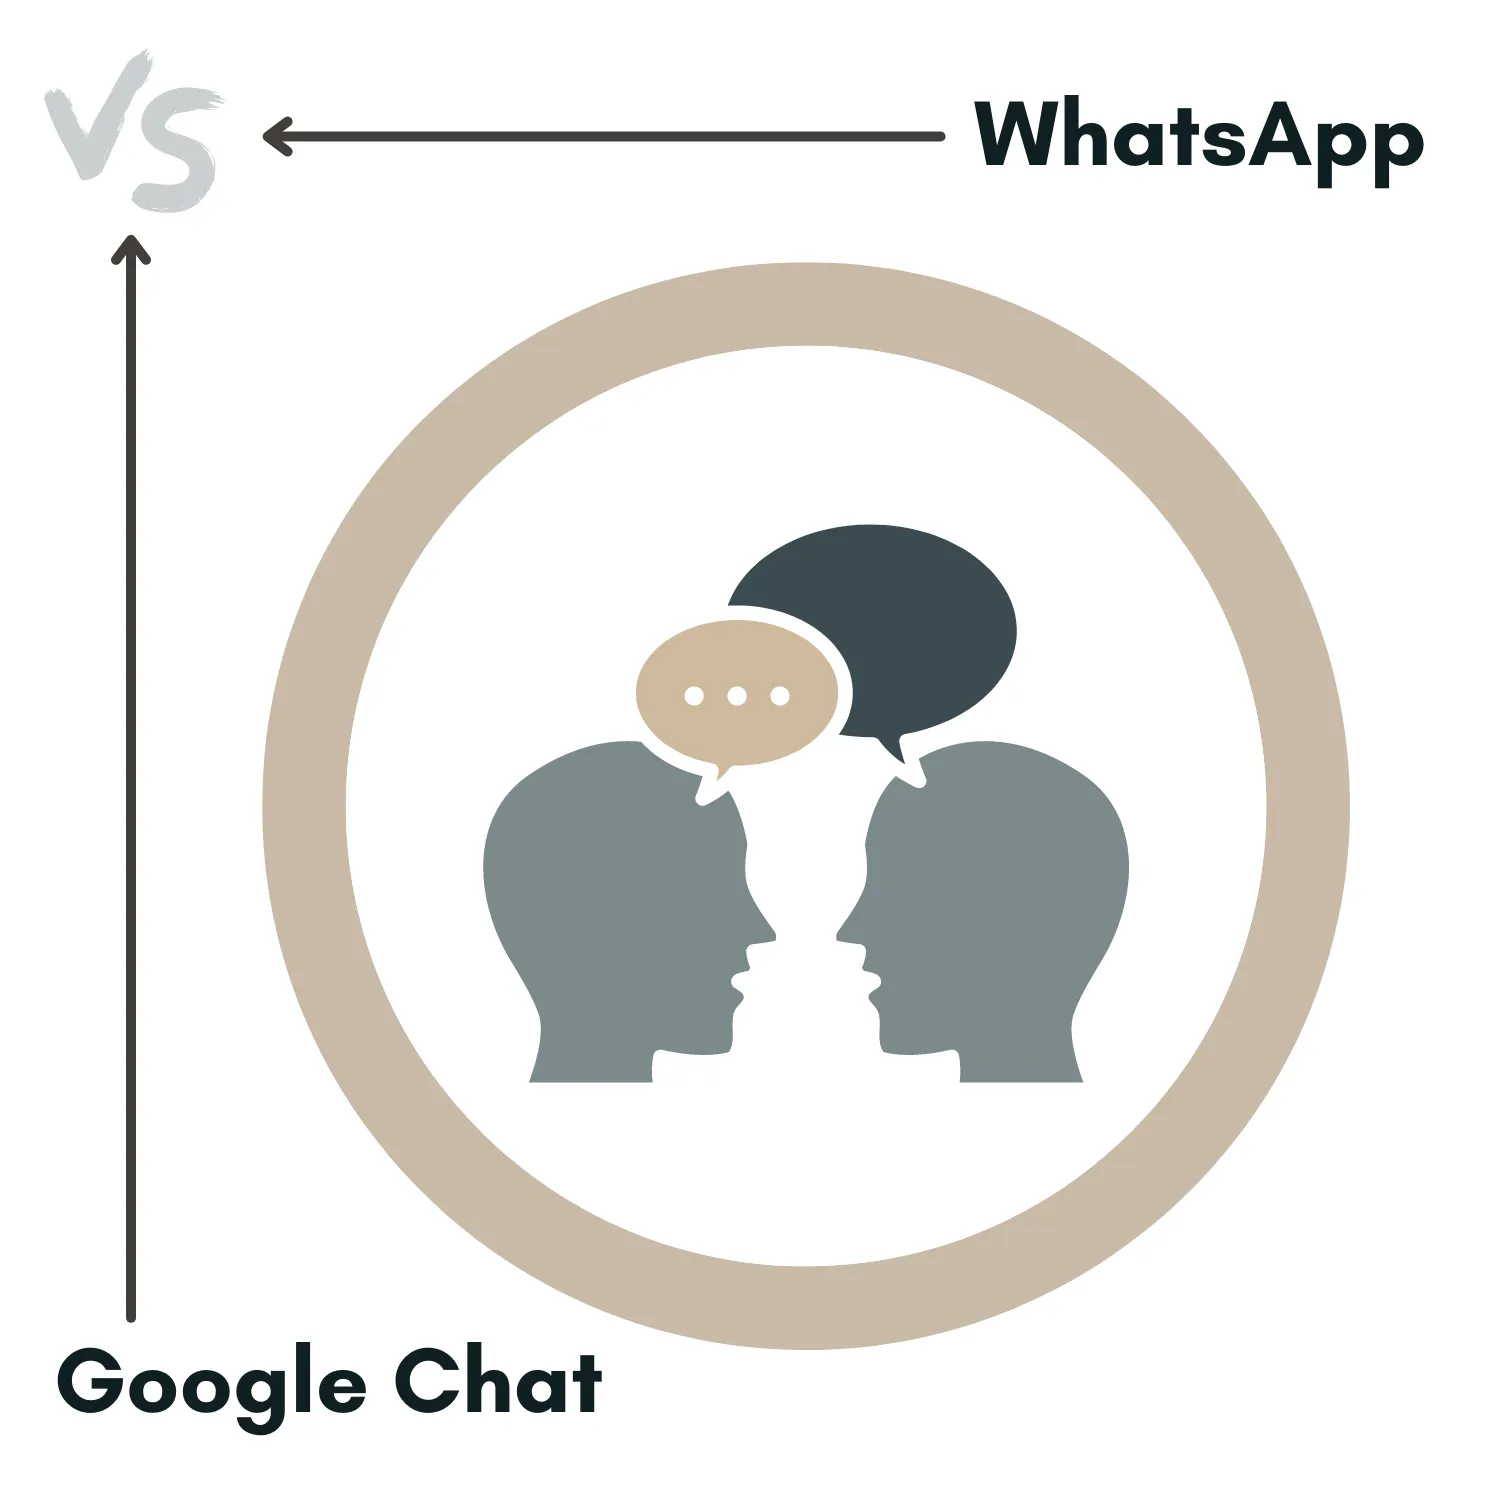 WhatsApp vs. Google Chat